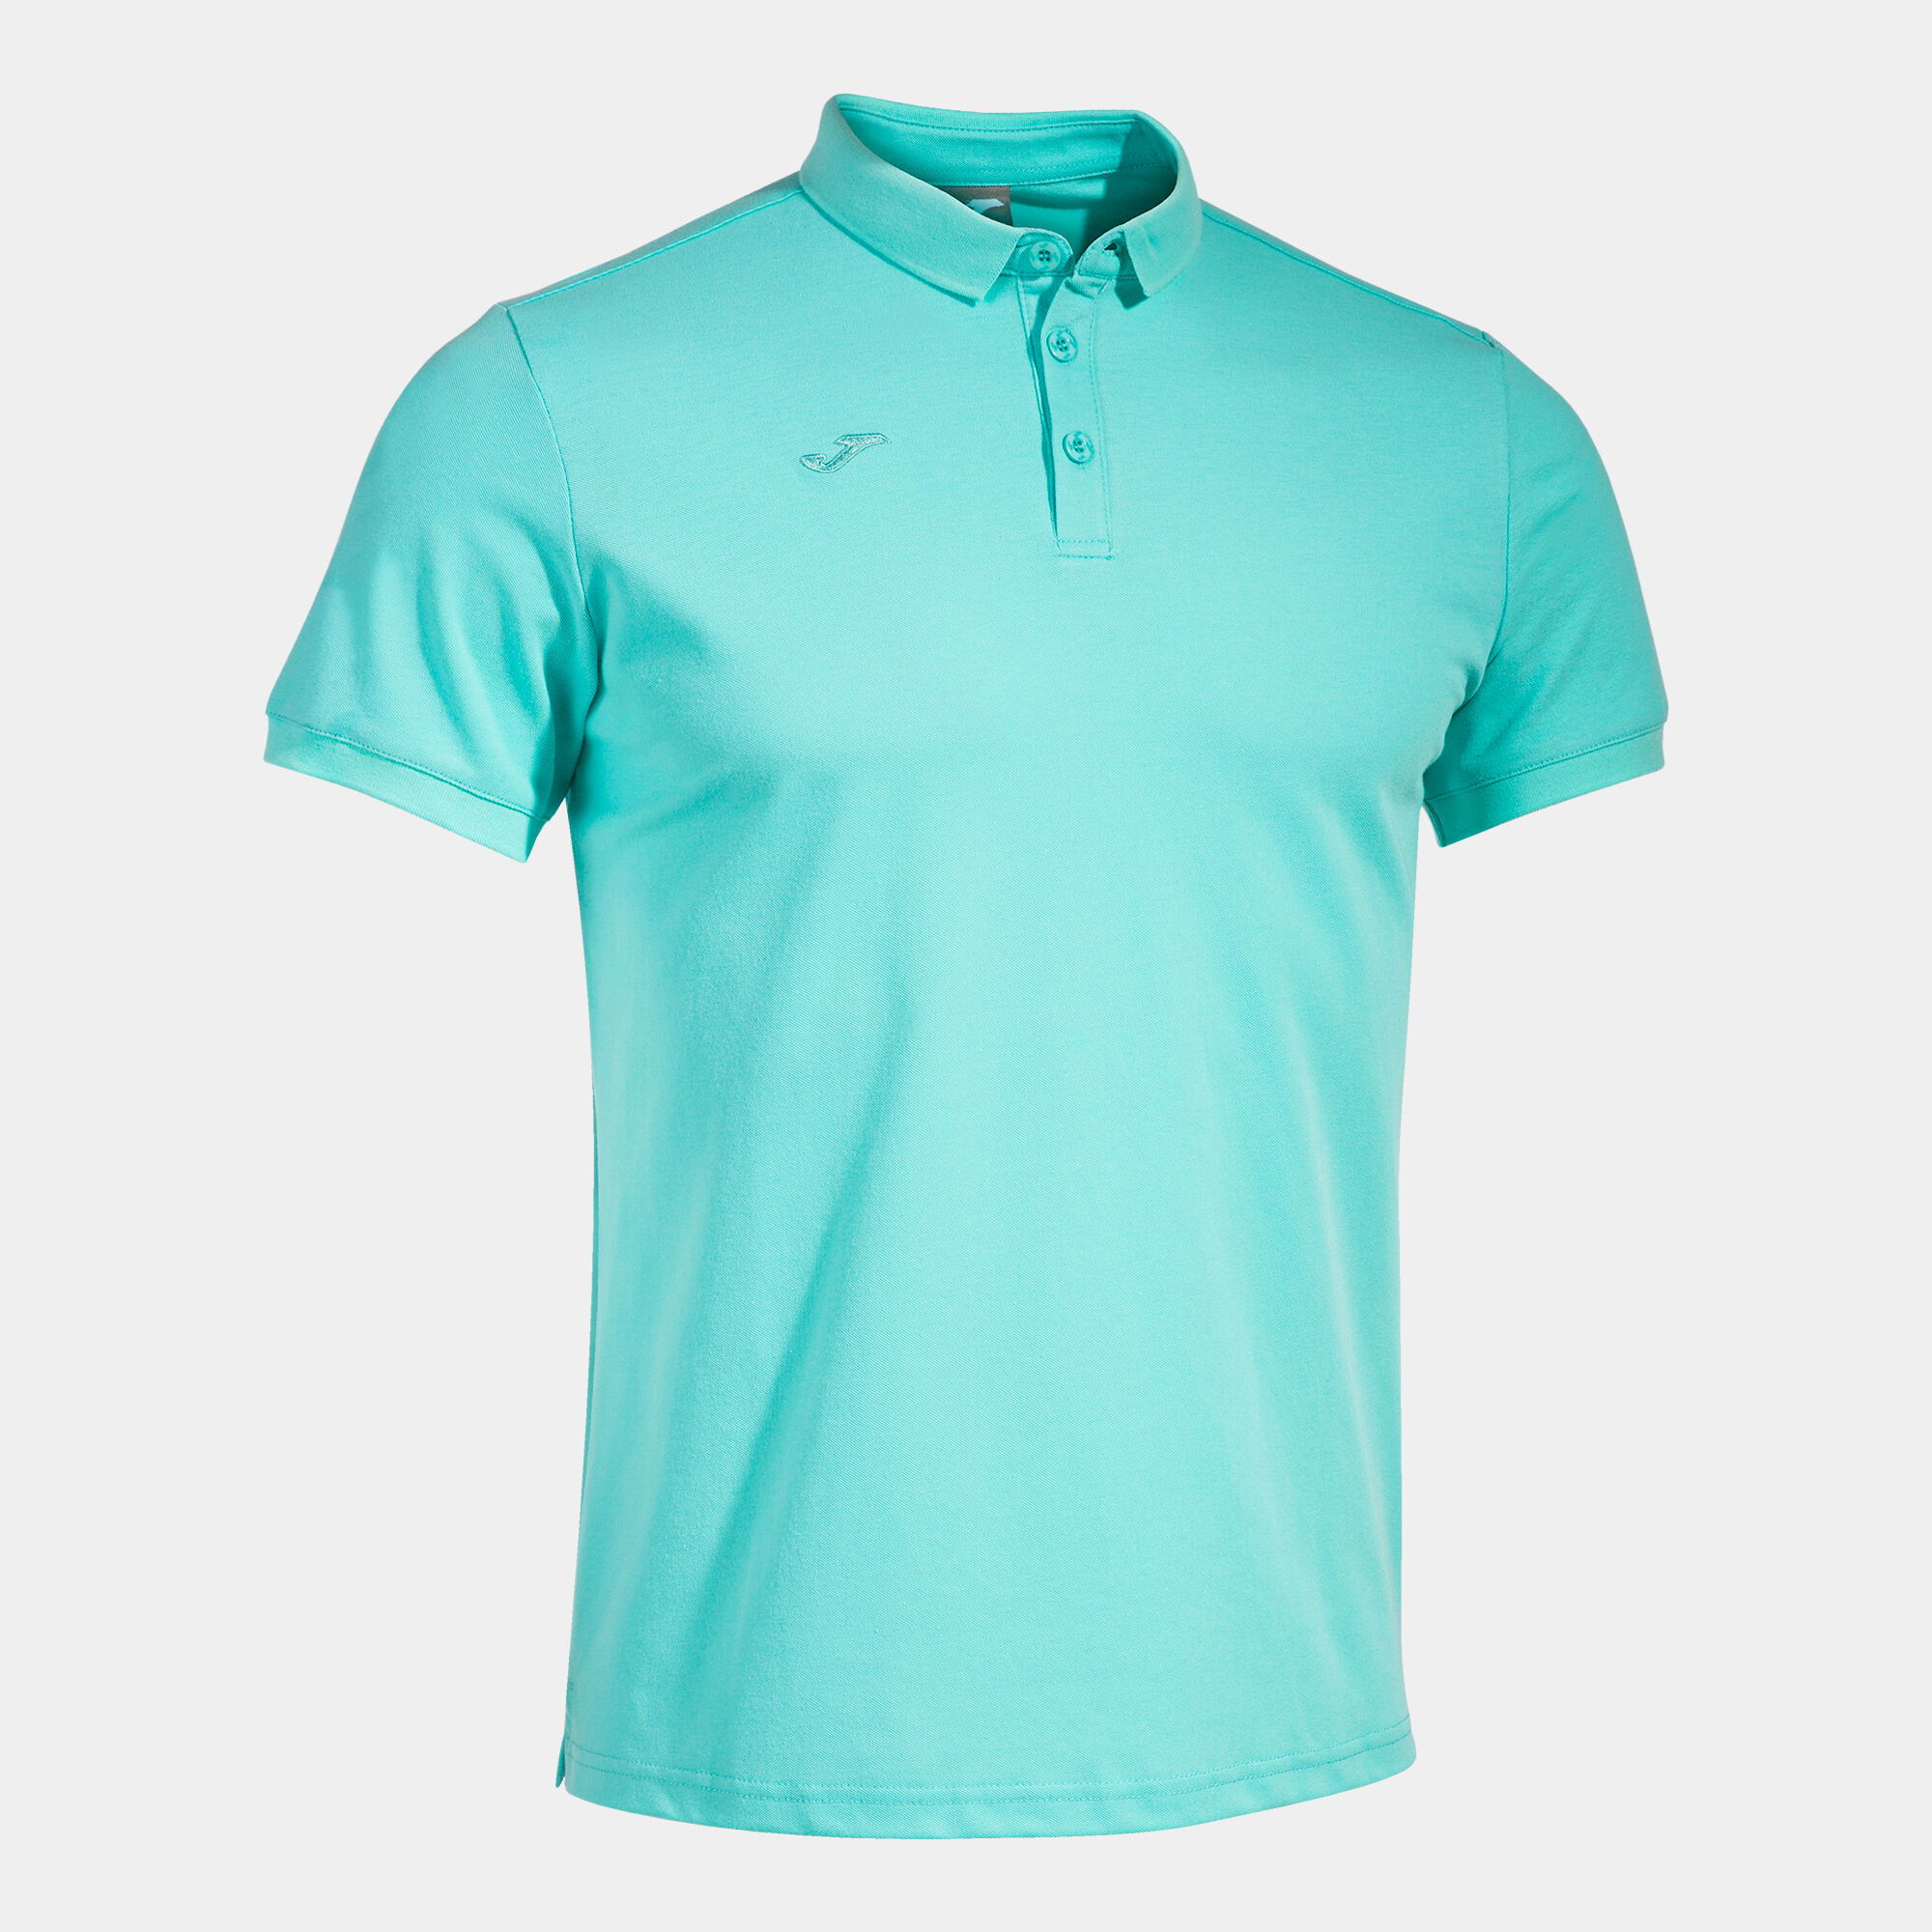 Polo shirt short-sleeve man Pasarela III turquoise